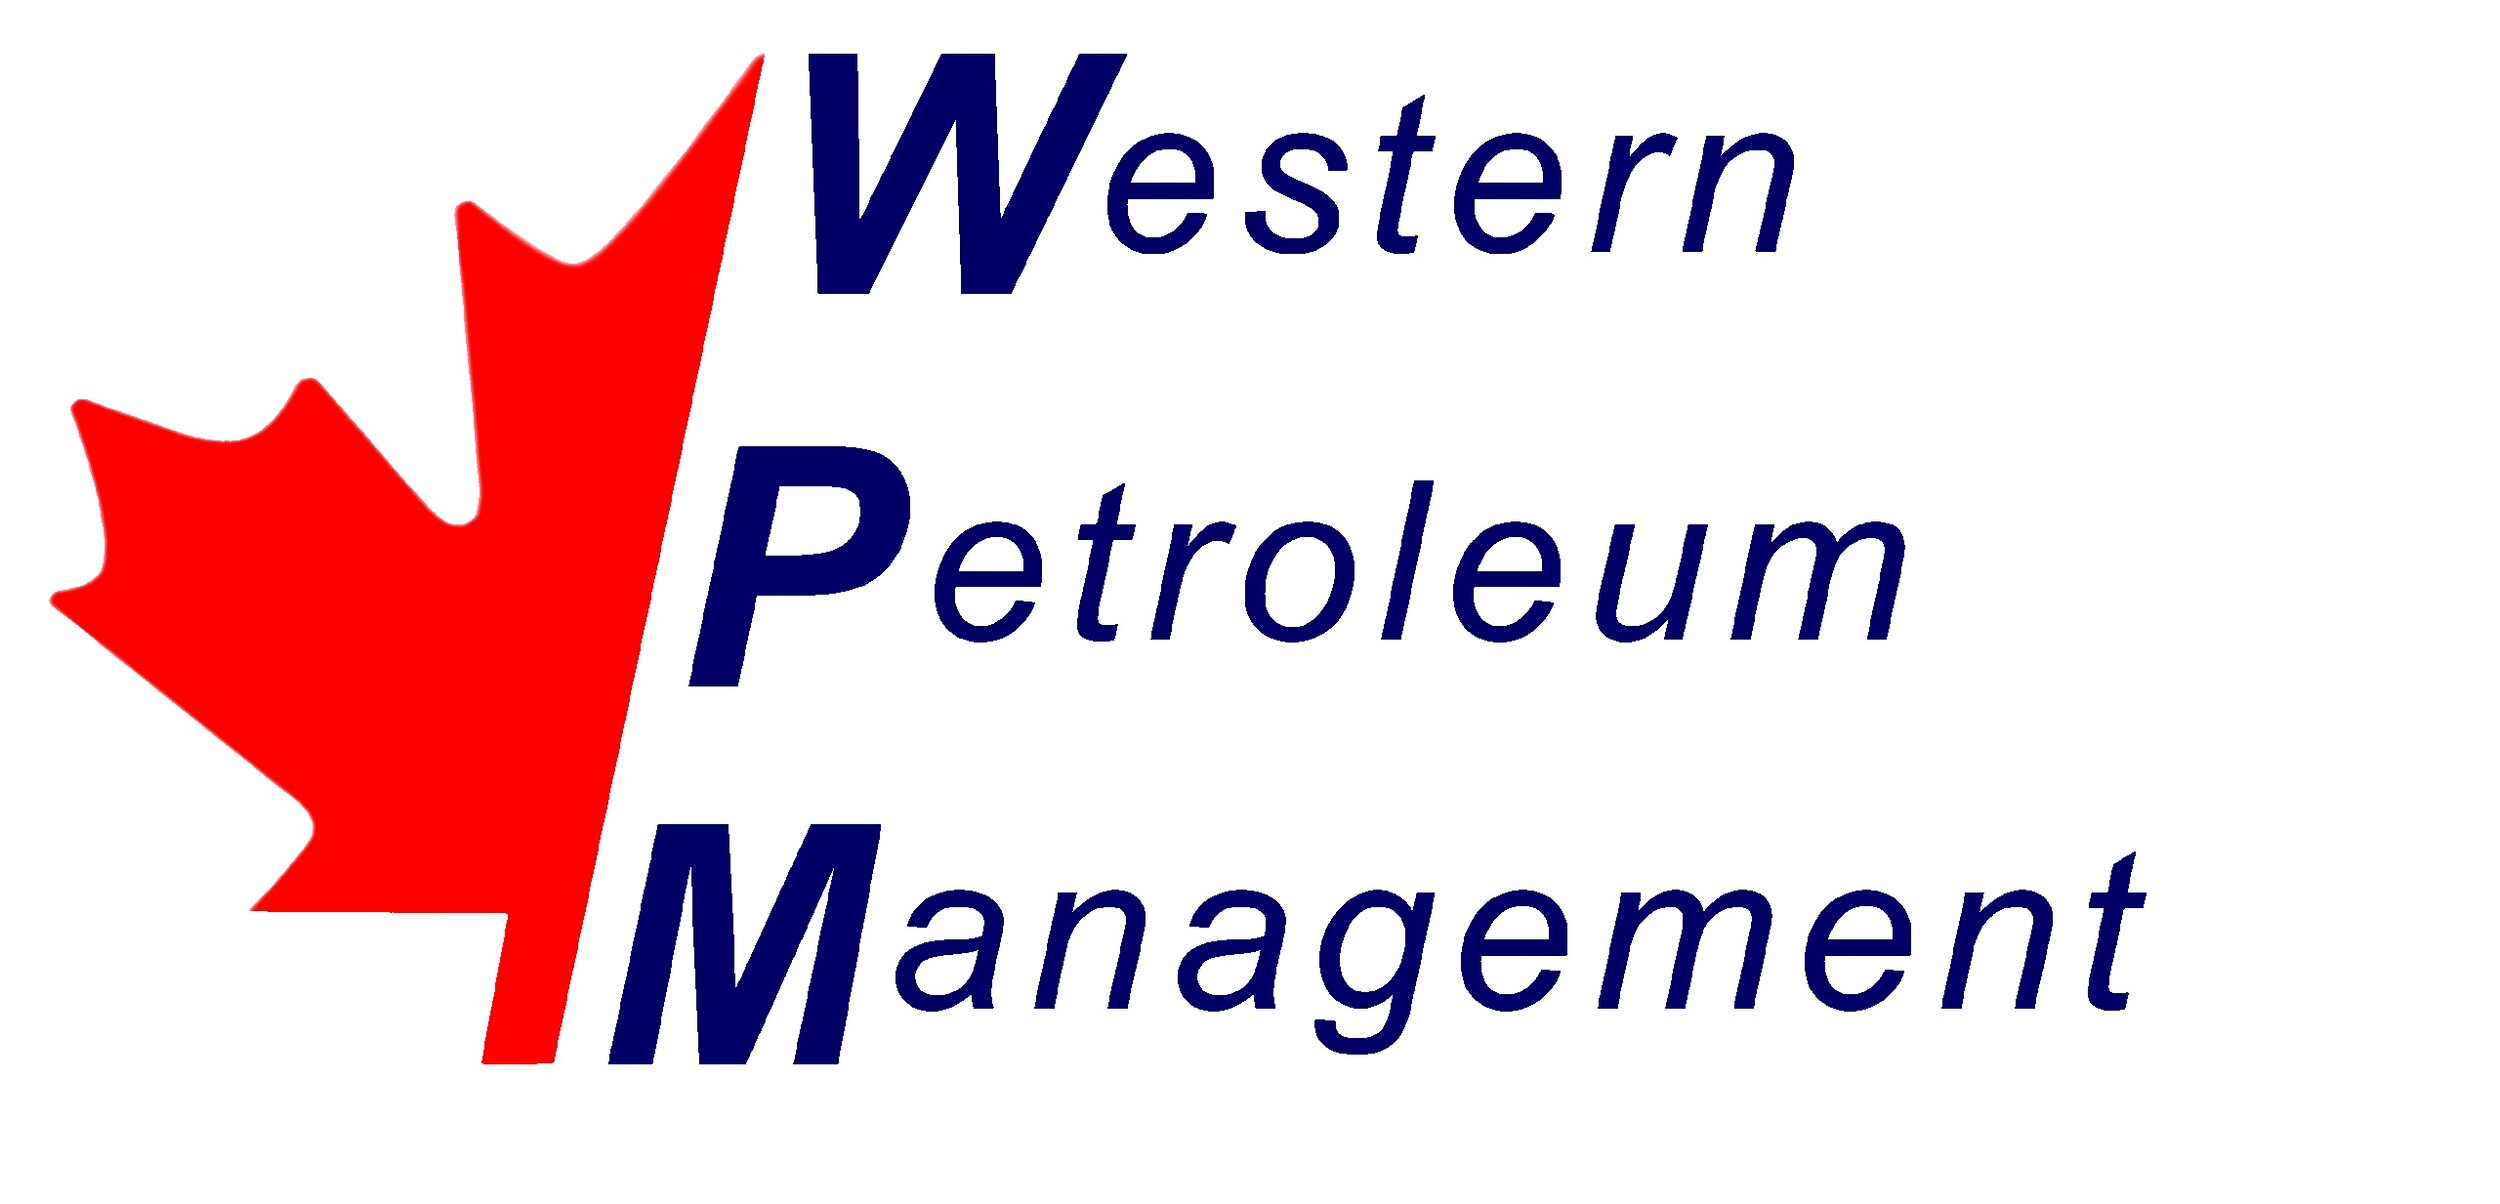 Western Petroleum Management.jpg